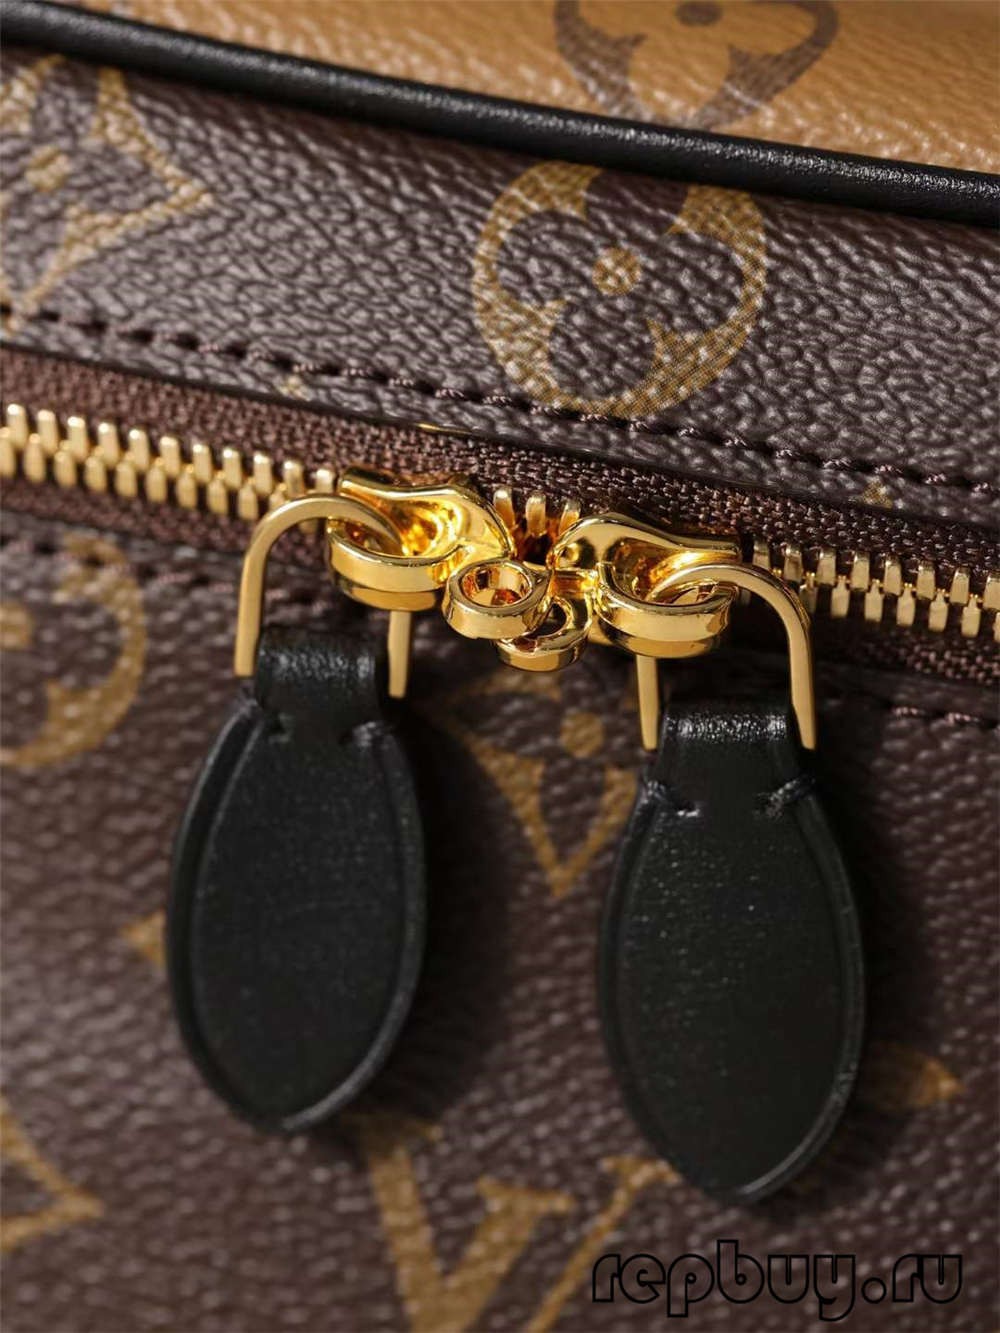 Louis Vuitton M45165 VANITY Small Top Replica Handbag Logo and Closure Detail (2022 Updated)-Tulaga sili ona lelei Fake Louis Vuitton Bag Faleoloa i luga ole laiga, Replica designer bag ru